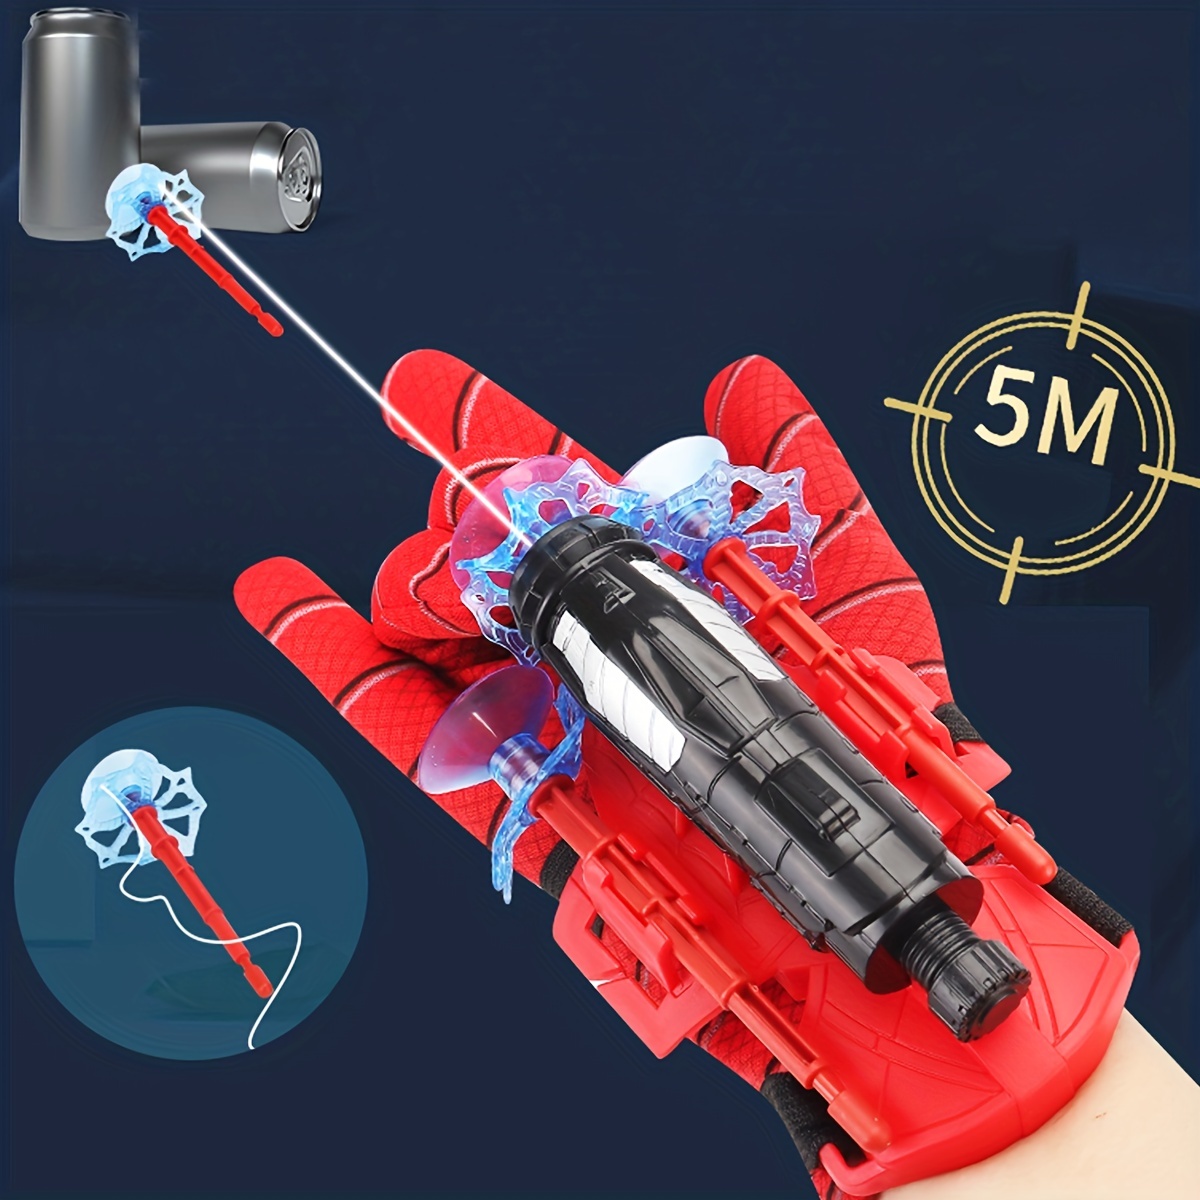 Jouet Spiderman launcher gant - Kit Technologie